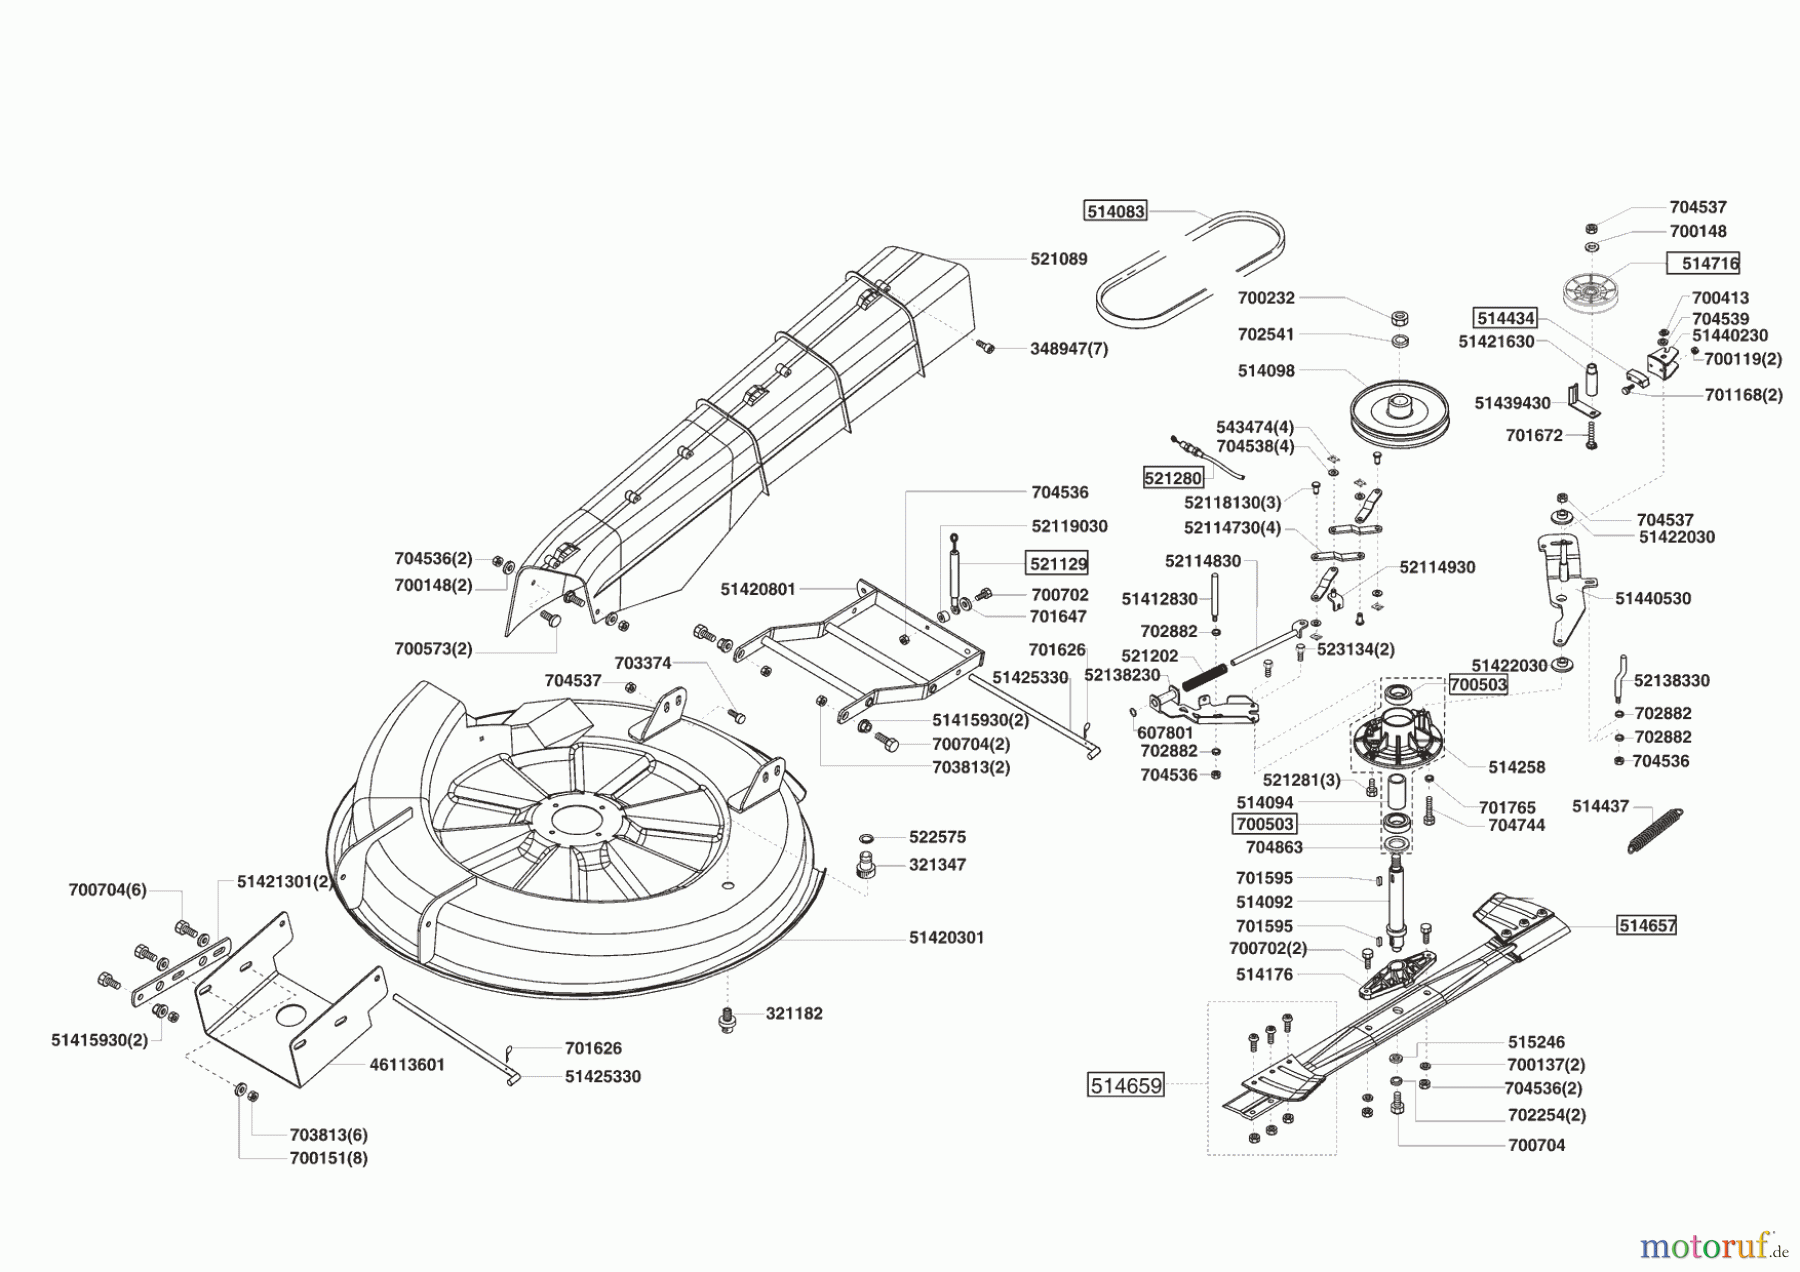  Sigma Gartentechnik Rasentraktor T 13/74 Seite 5